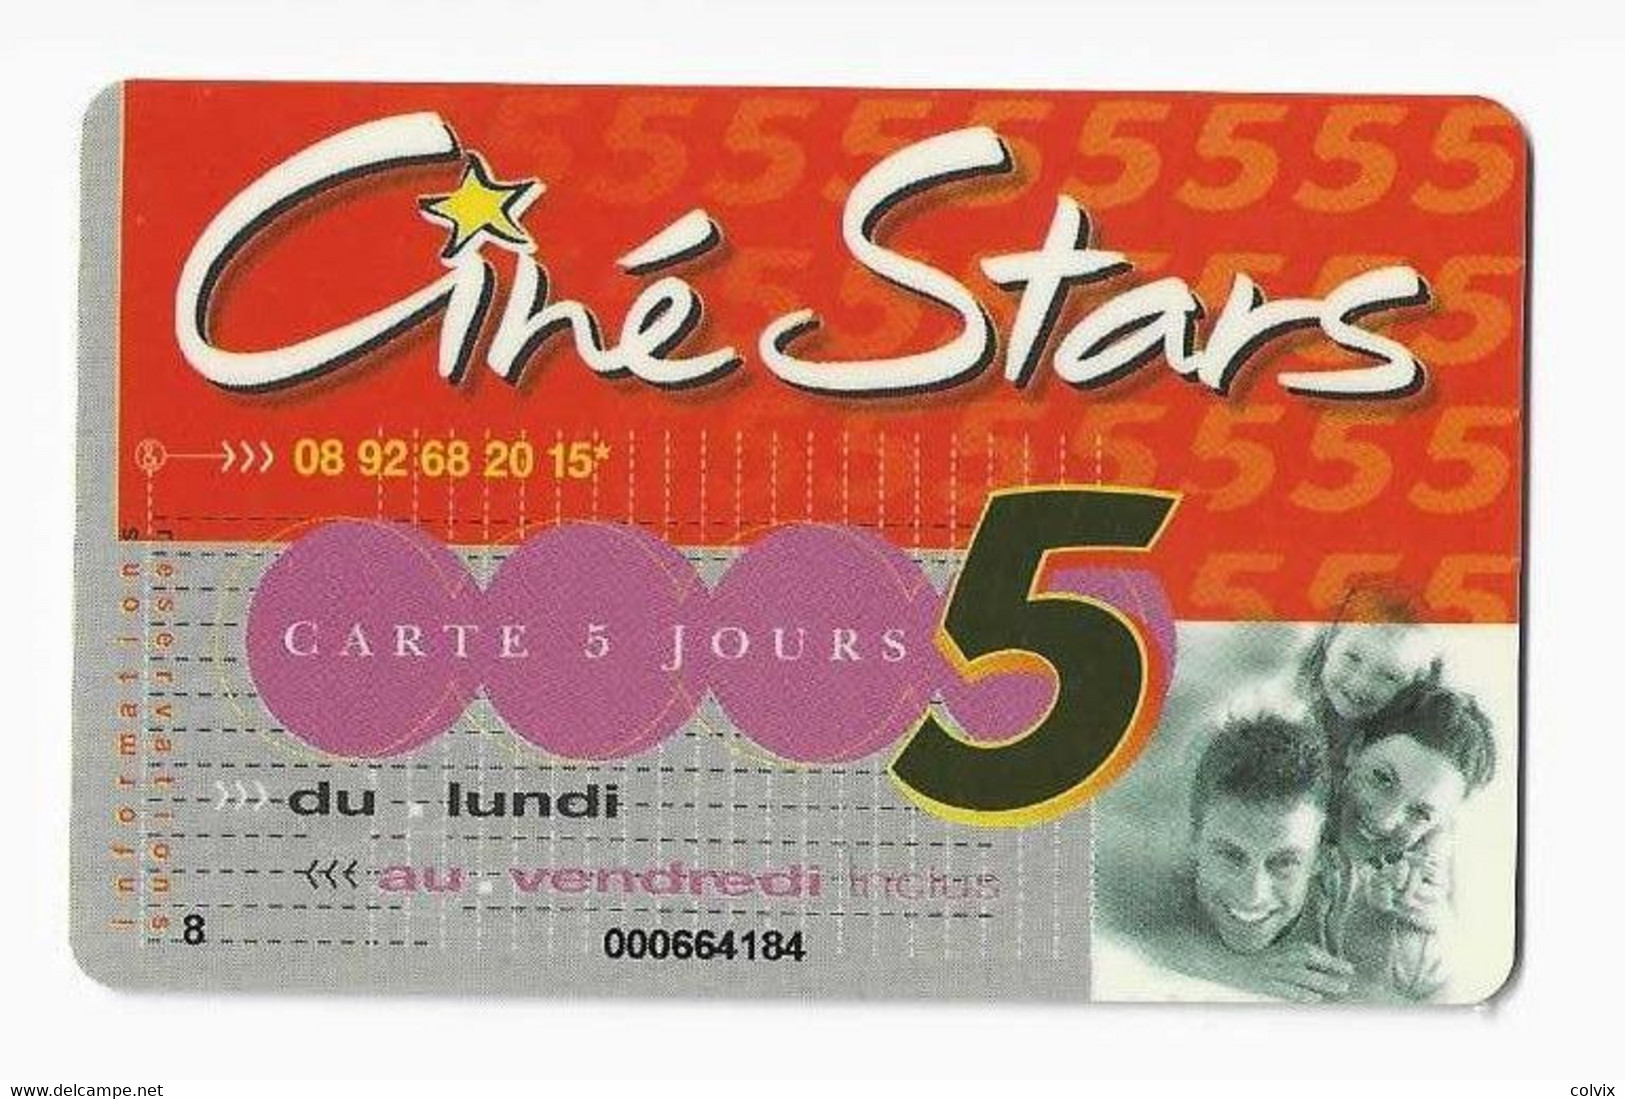 FRANCE CARTE CINEMA CINE STARS 5 JOURS - Kinokarten